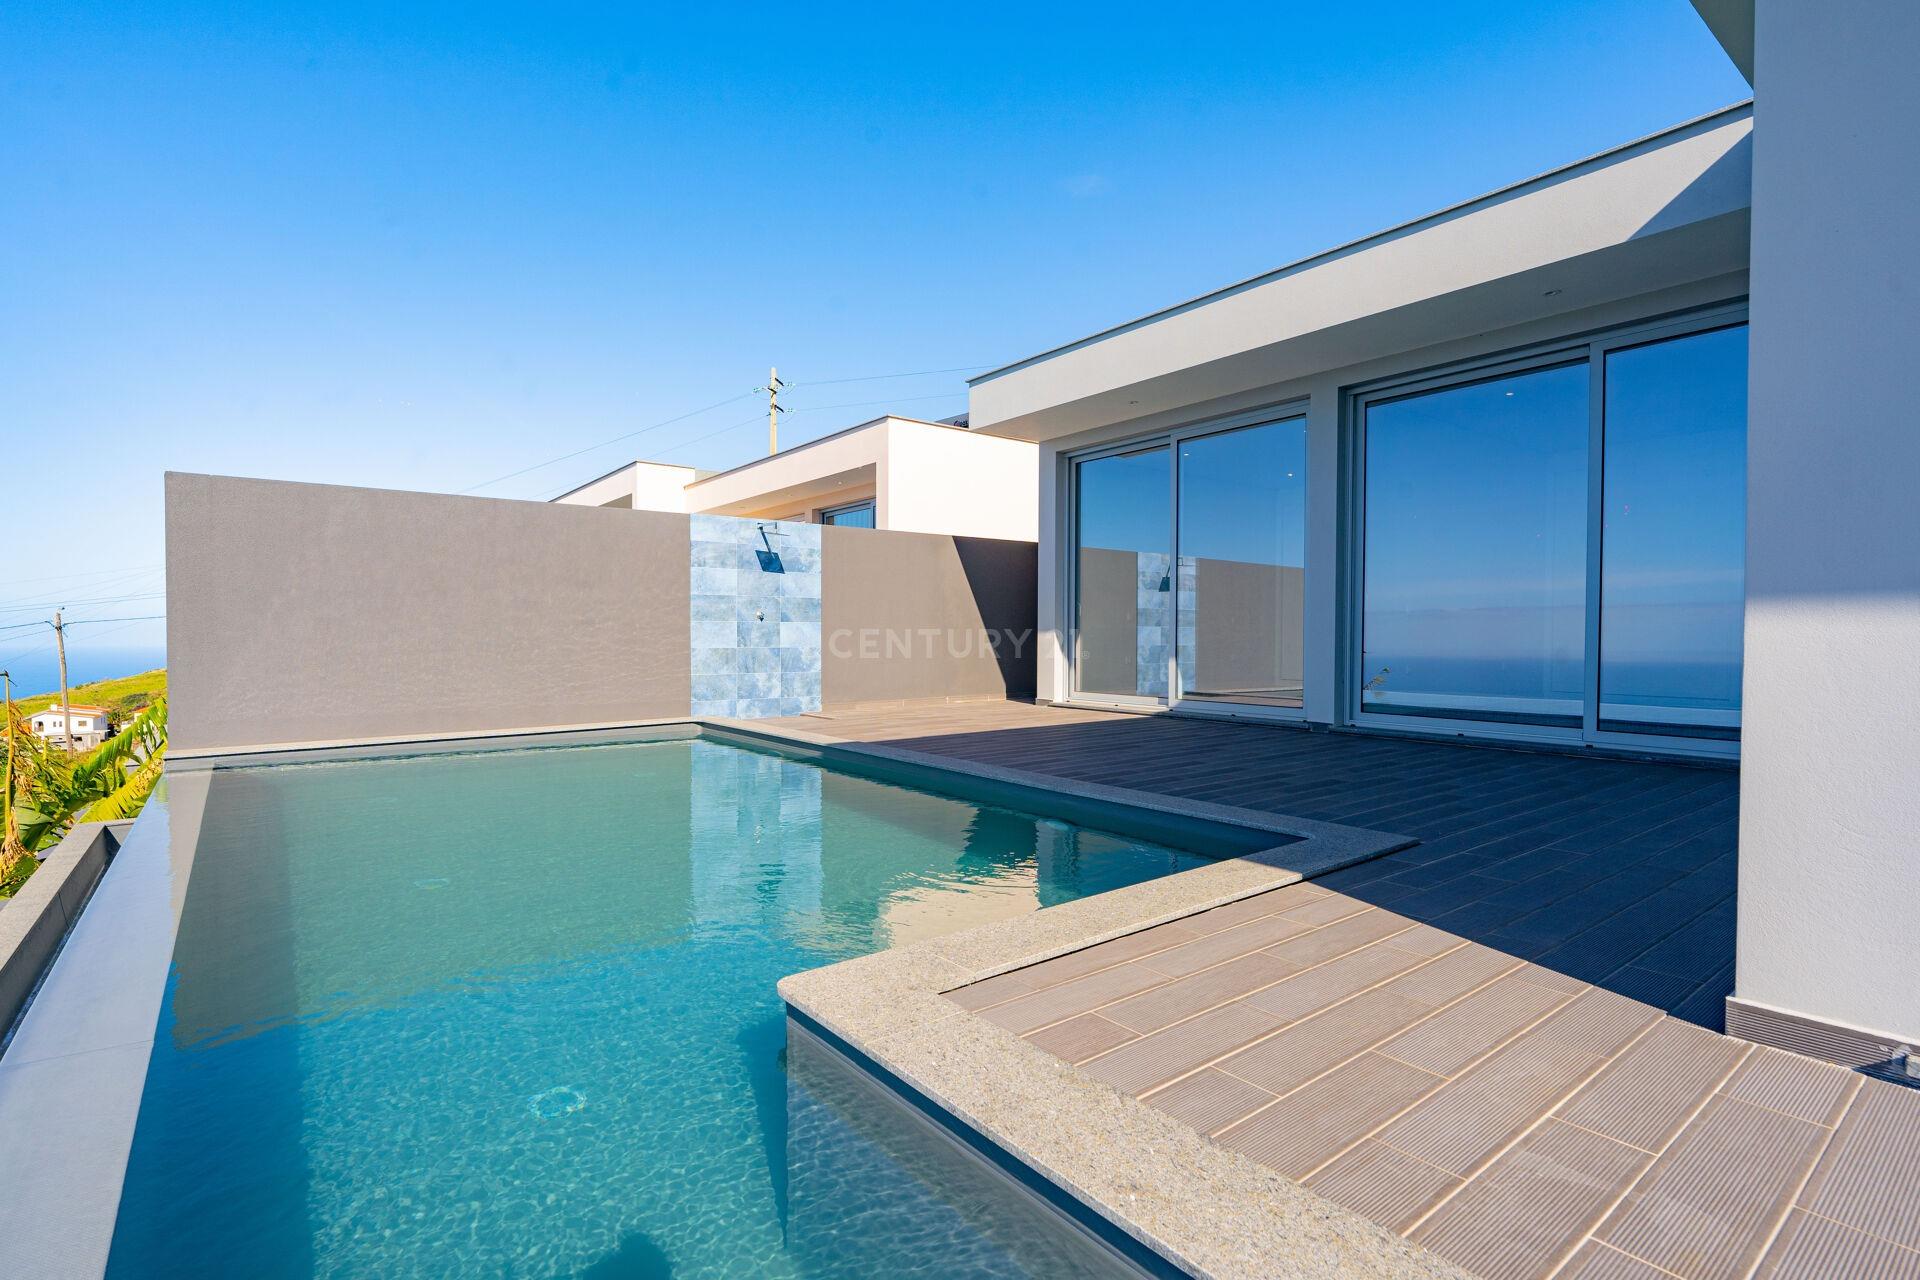 New Three Bedroom Single Storey House - Pool and Stunning Sea View - Calheta